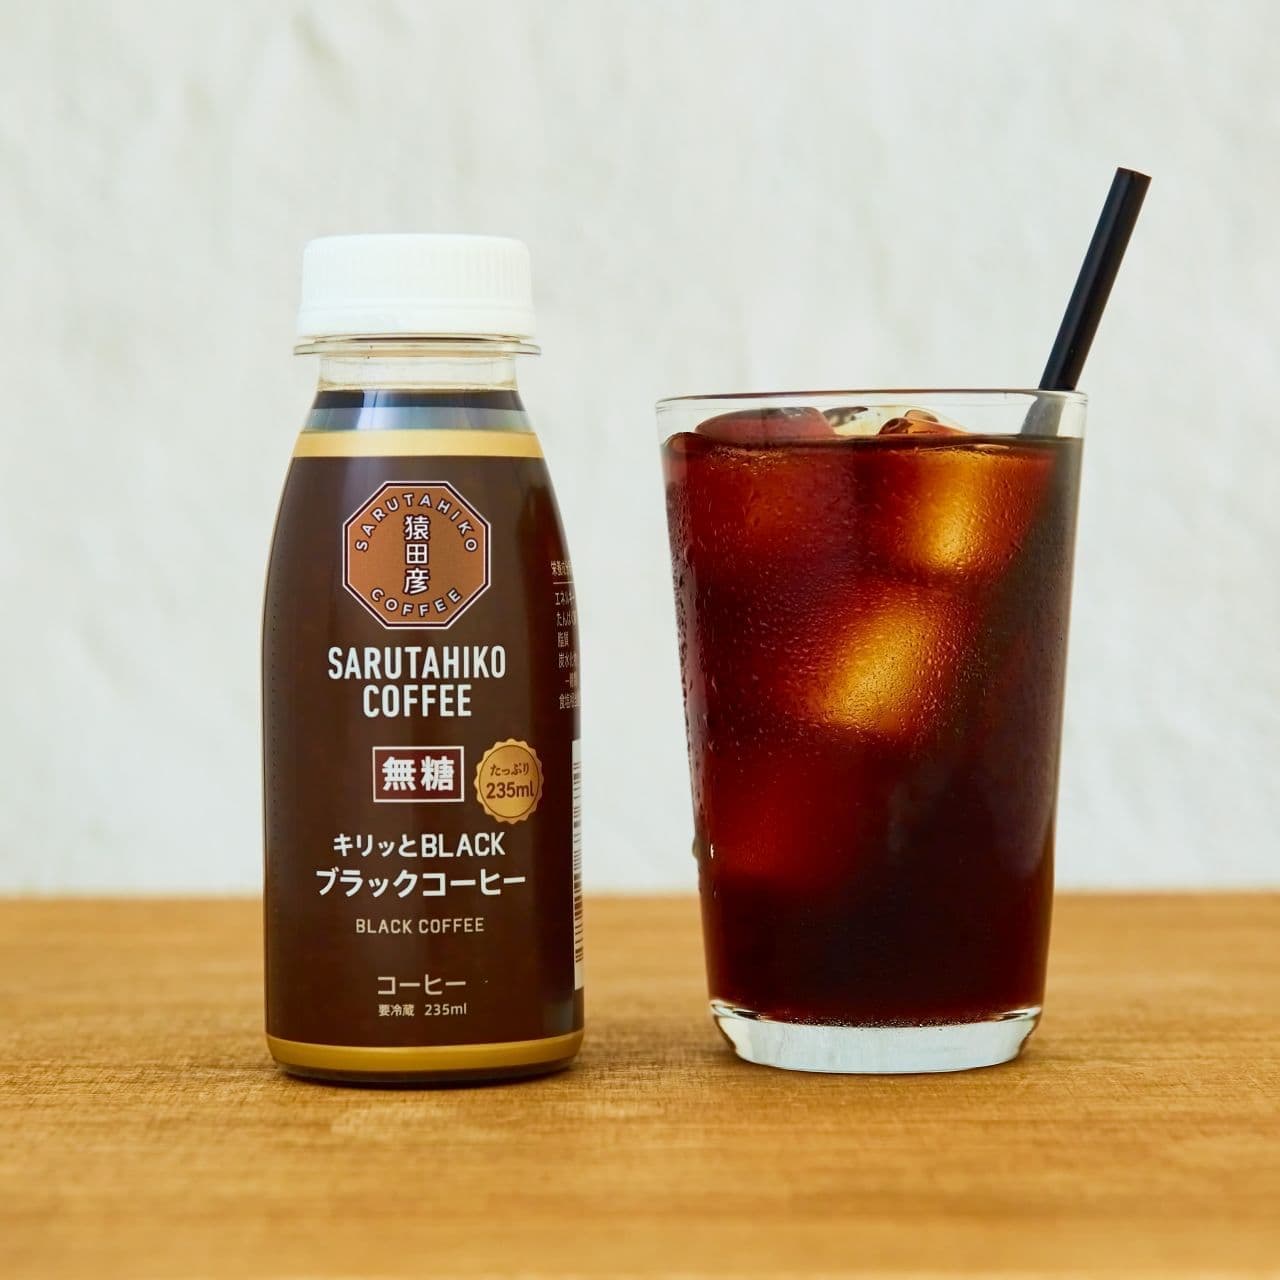 Sarutahiko Coffee's first chilled coffee